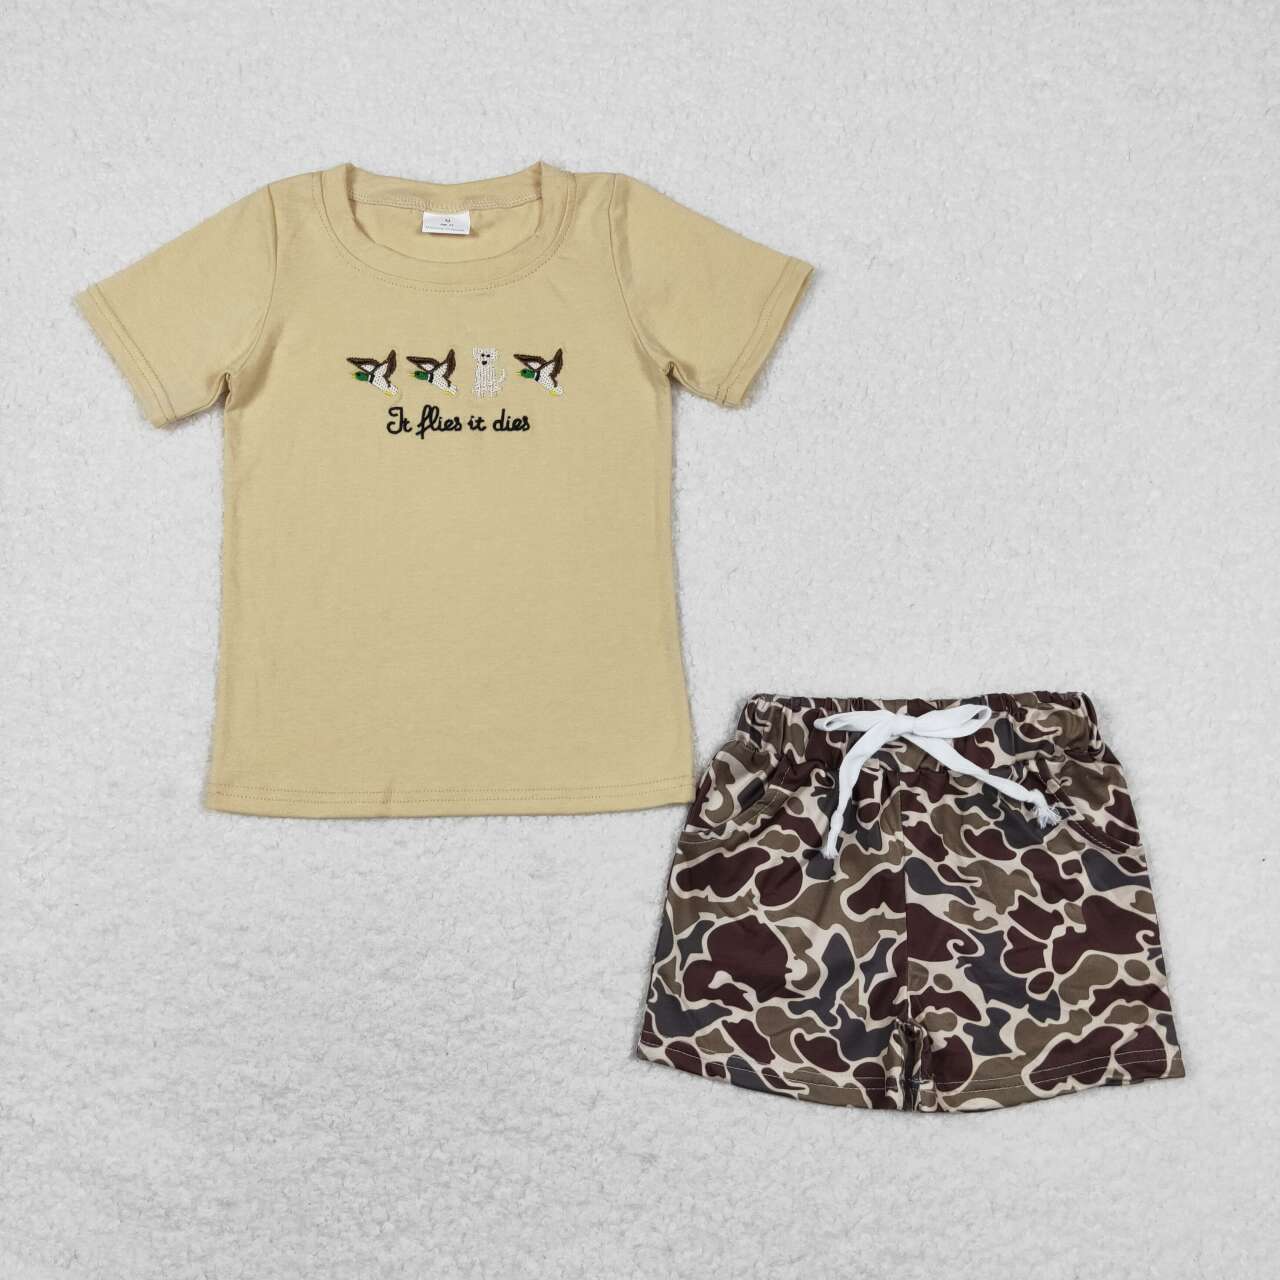 BSSO0711  Duck Dog Embroidery Top Camo Shorts Boys Summer Clothes Set